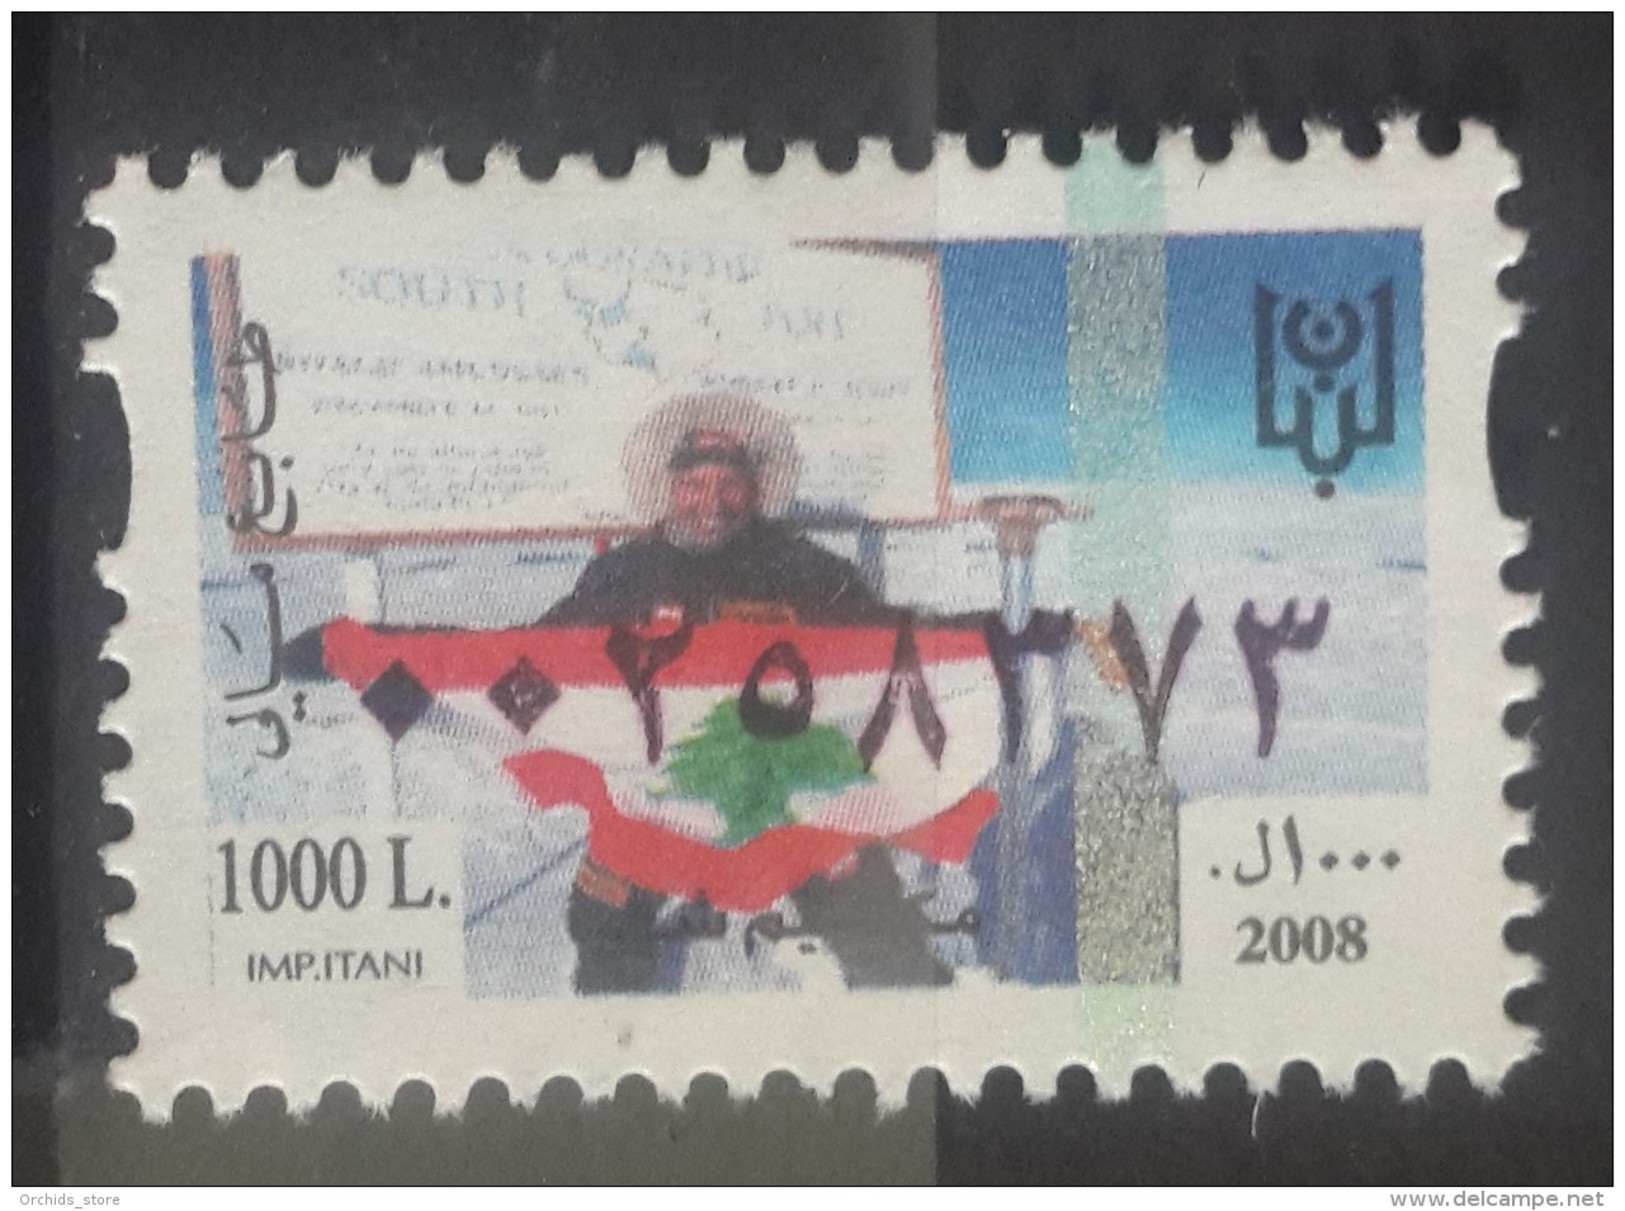 Lebanon 2008 Fiscal Revenue Stamp 1000 L - MNH - Maxime Chaaya @ The North Pole - Lebanon